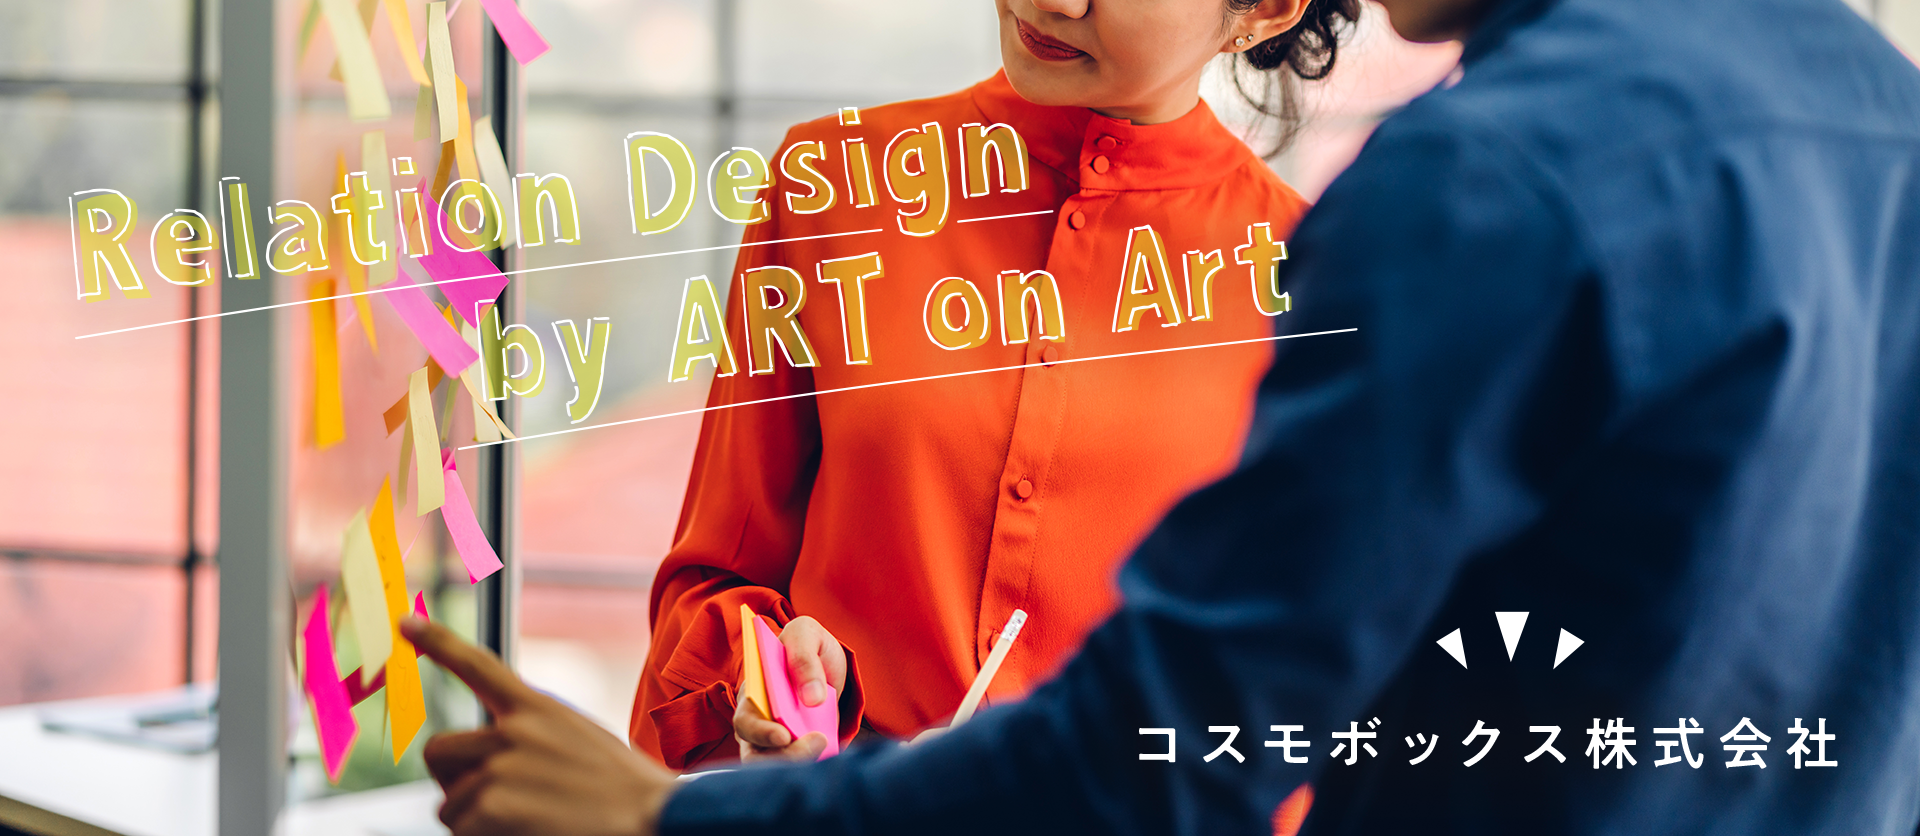 Relation Design by ART on Art コスモボックス株式会社